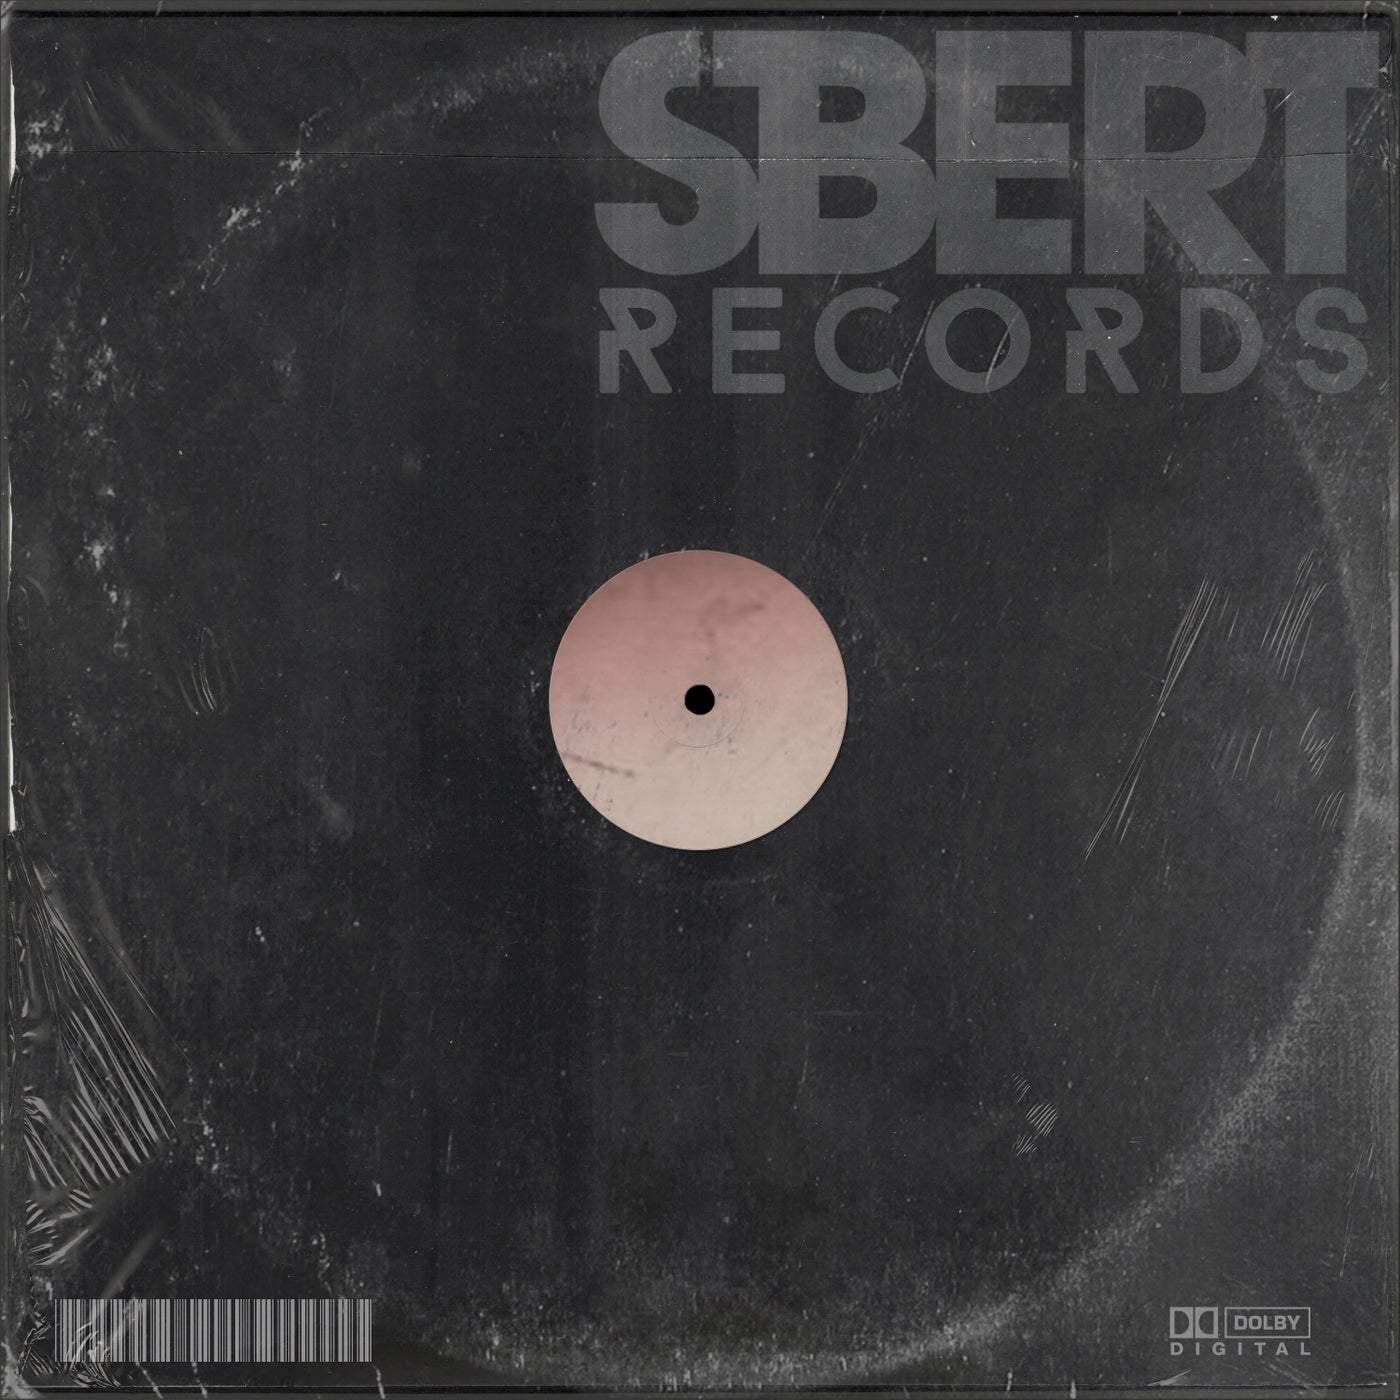 image cover: Sphere by Dani Sbert on Sbert Records